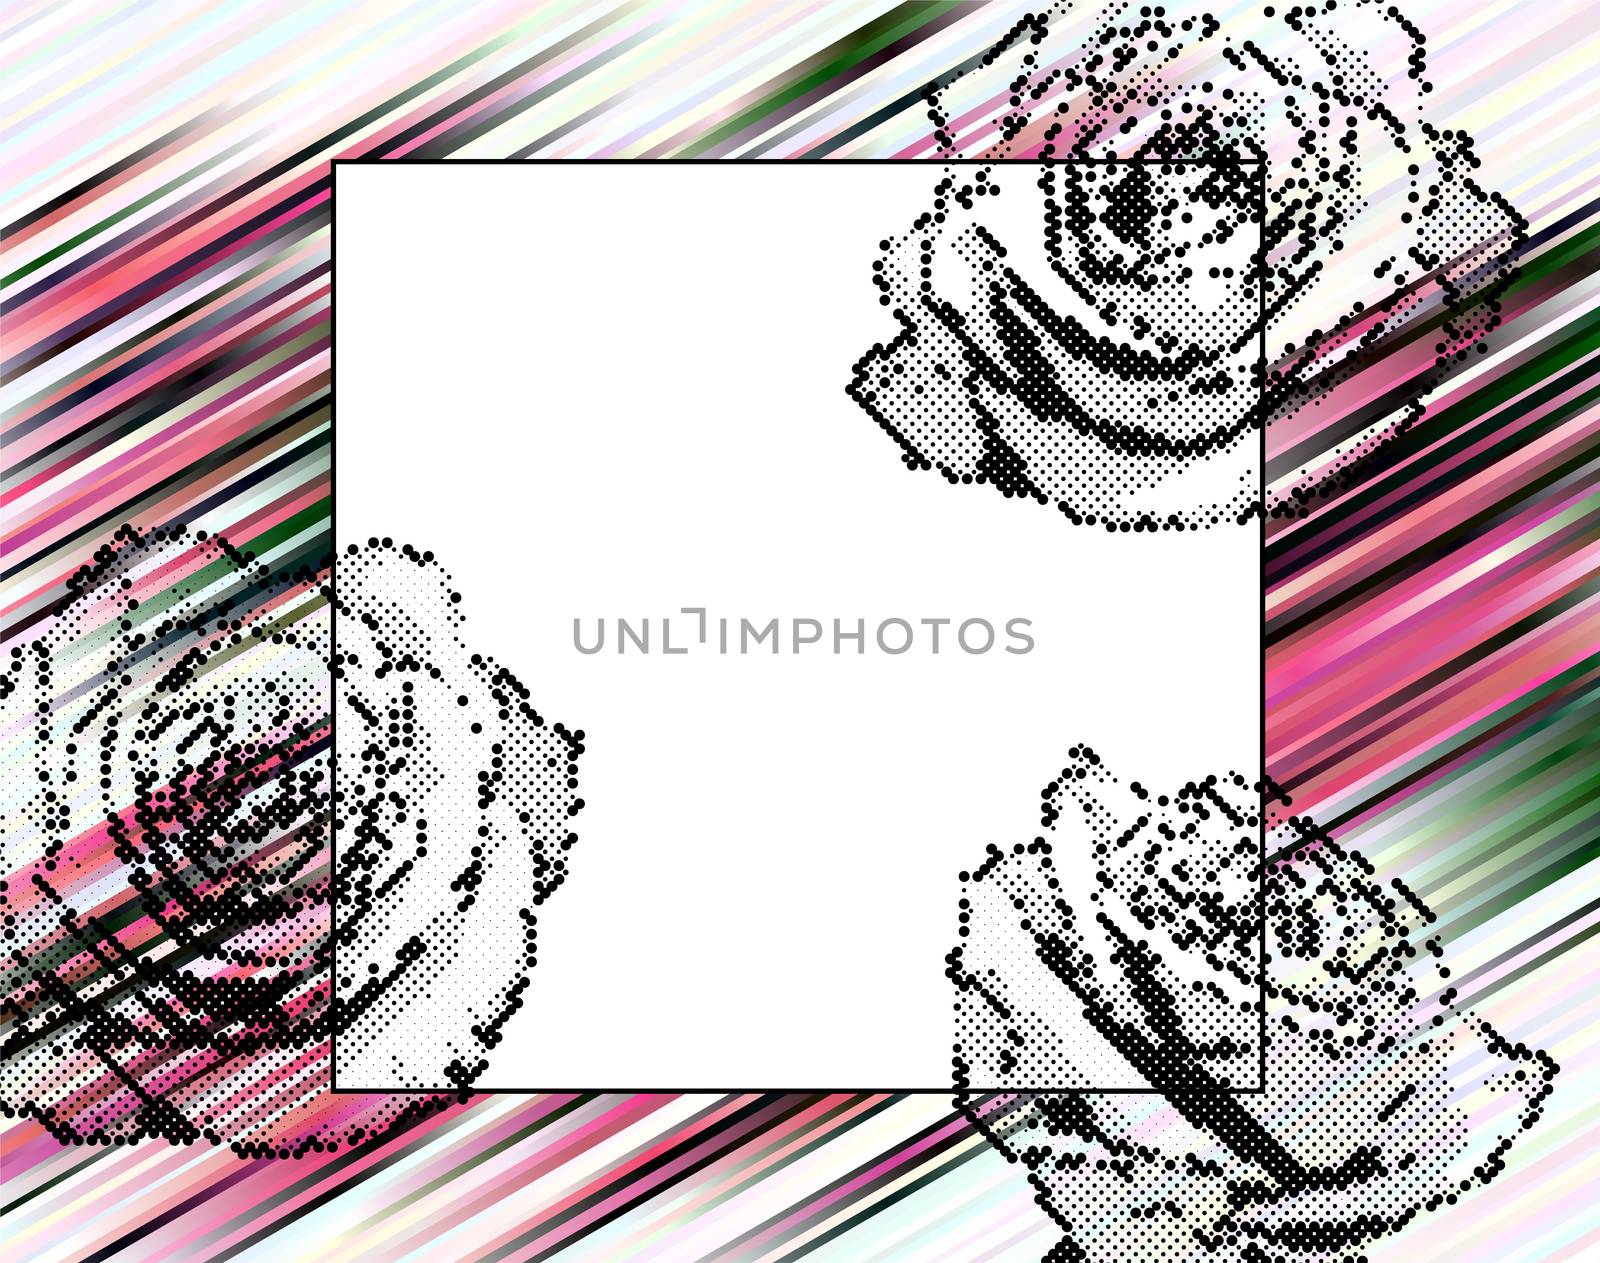 halhtone roses on magenta, black, white and green stripes background frame